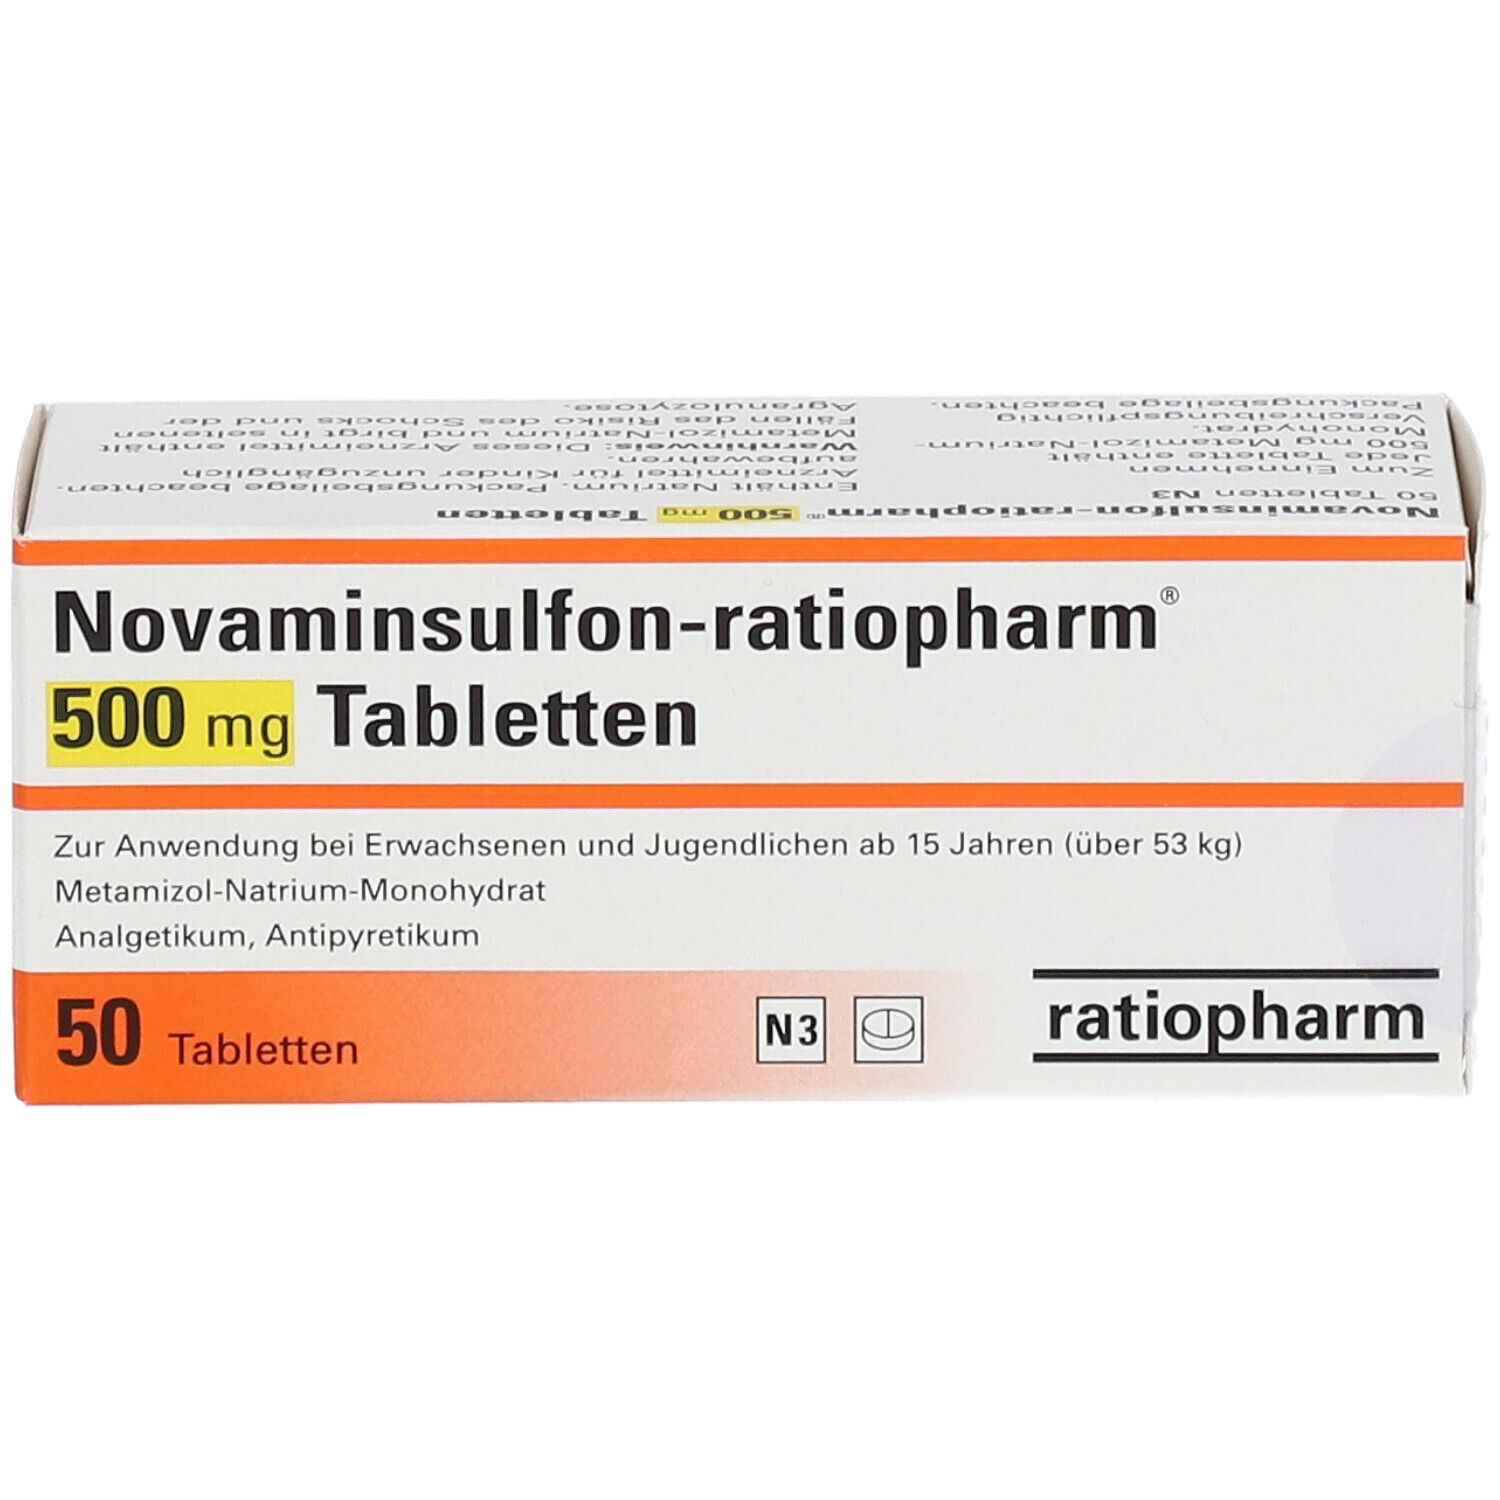 Novaminsulfon-ratiopharm ® 500 mg.